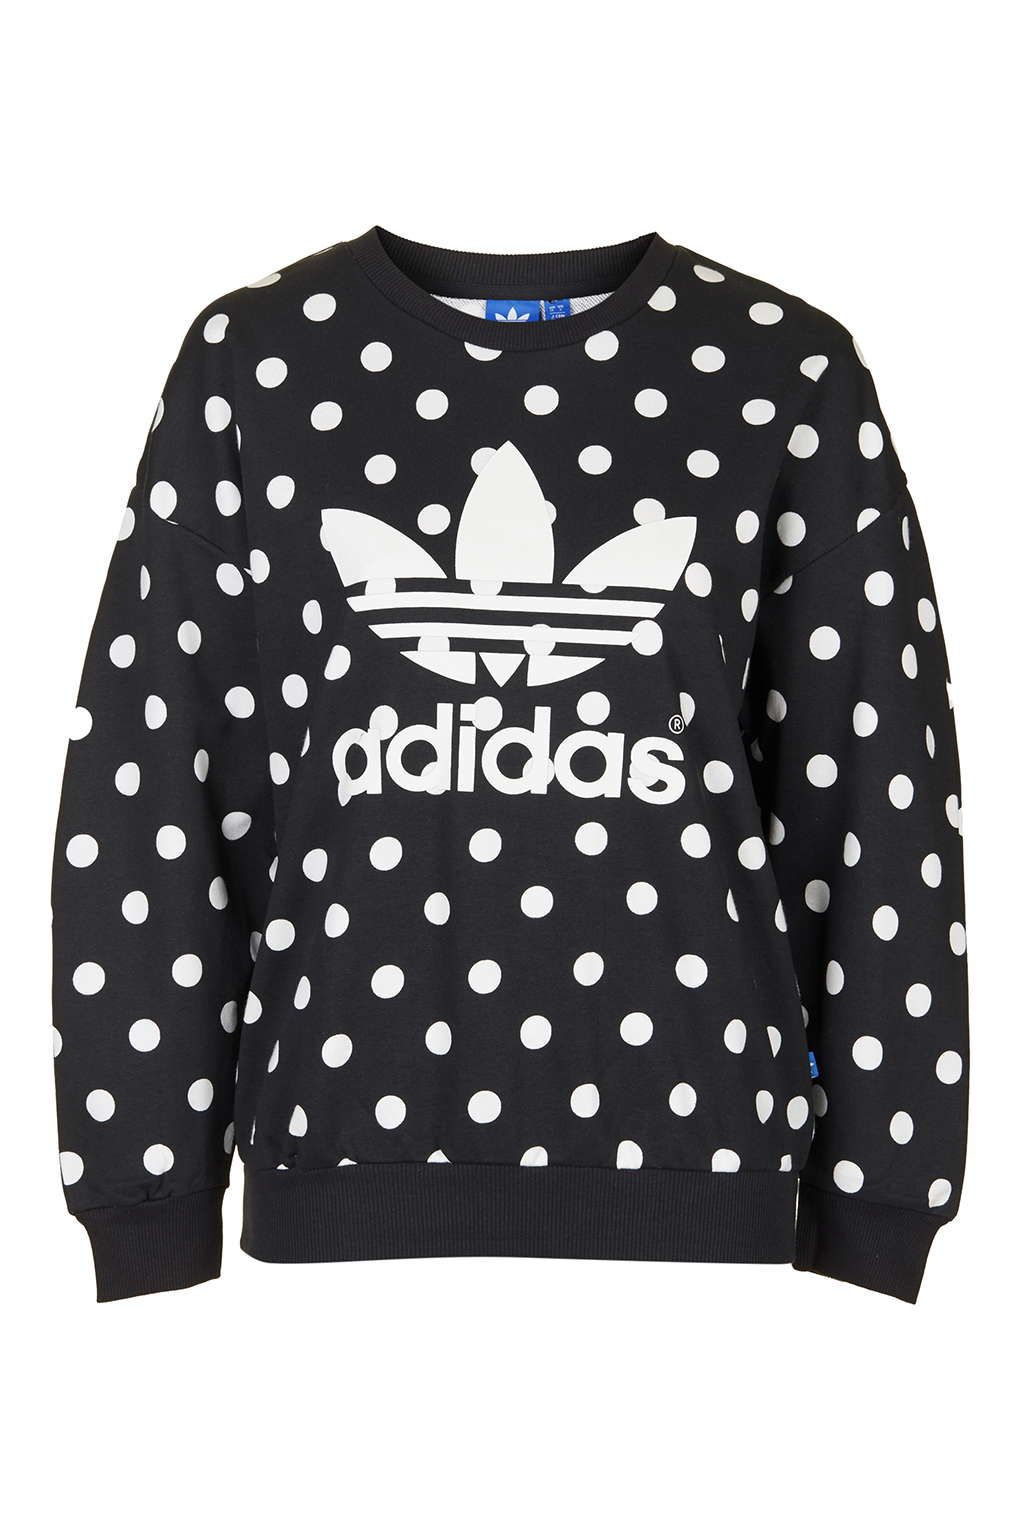 Adidas Polka Dot Sweatshirt Clearance, 60% OFF | ilikepinga.com